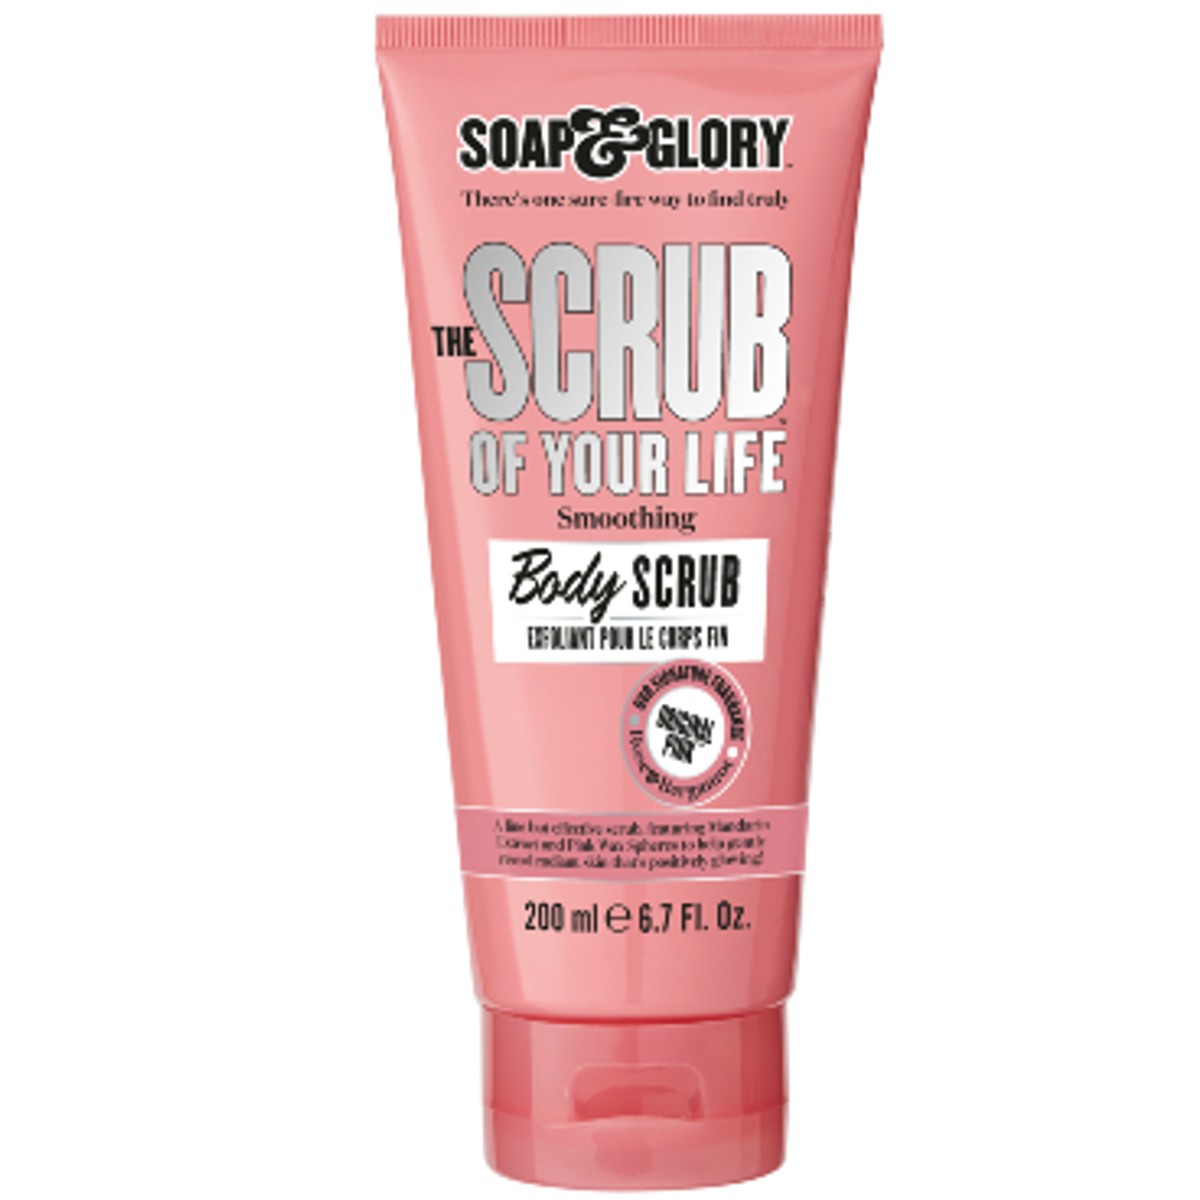 Soap & Glory The Scrub Of Your Life Body Scrub